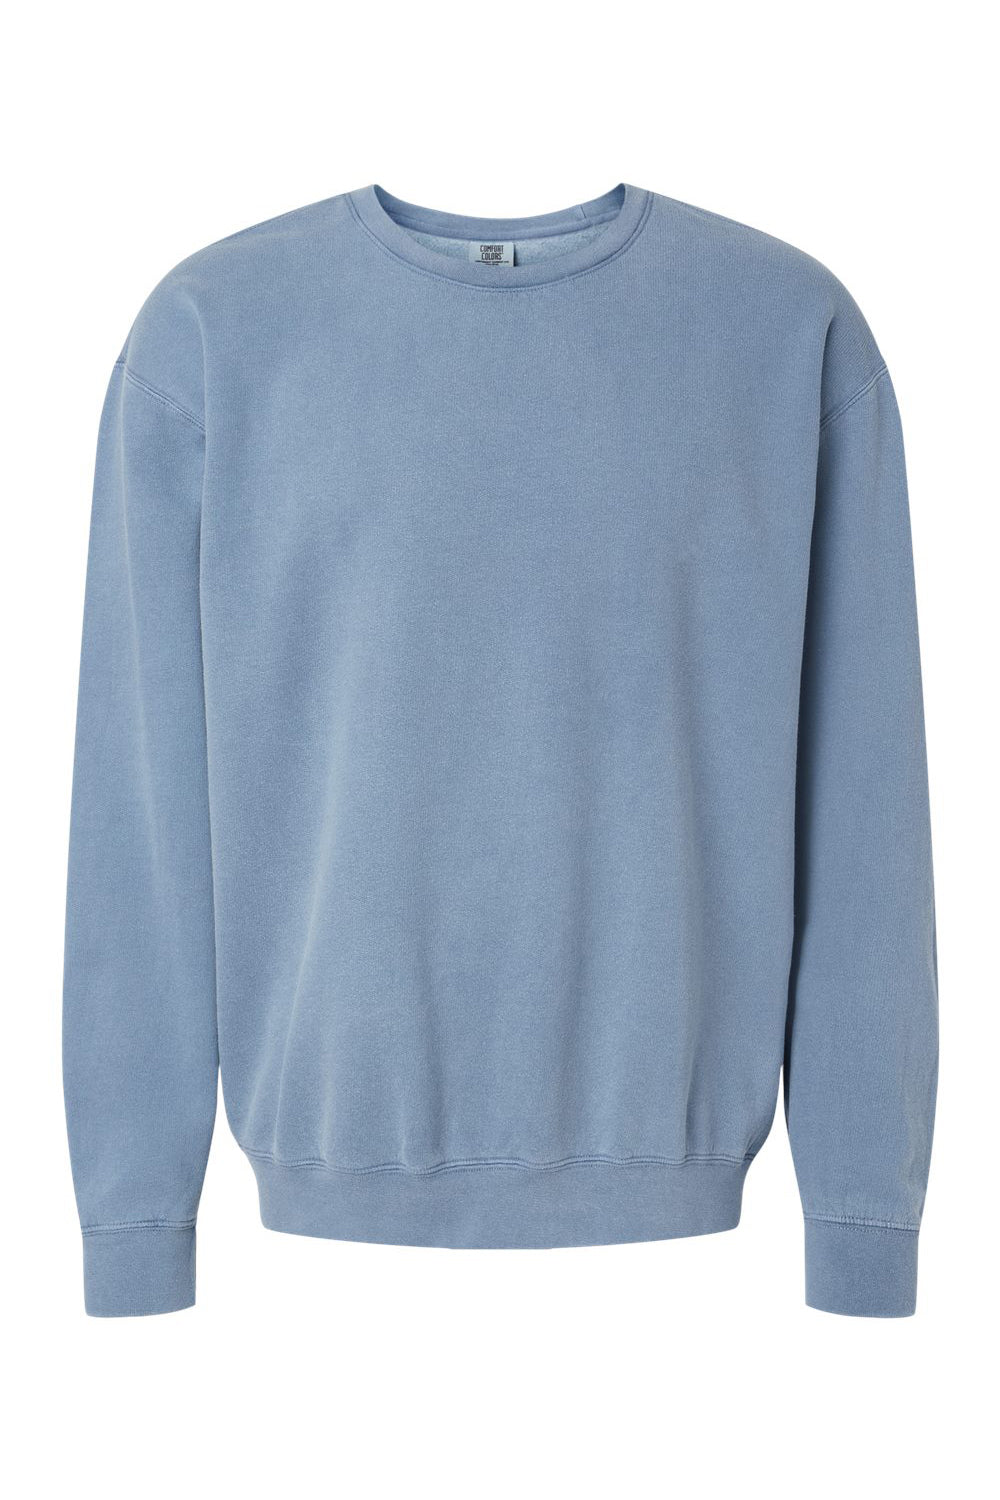 Comfort Colors 1466 Mens Garment Dyed Fleece Crewneck Sweatshirt Blue Jean Flat Front